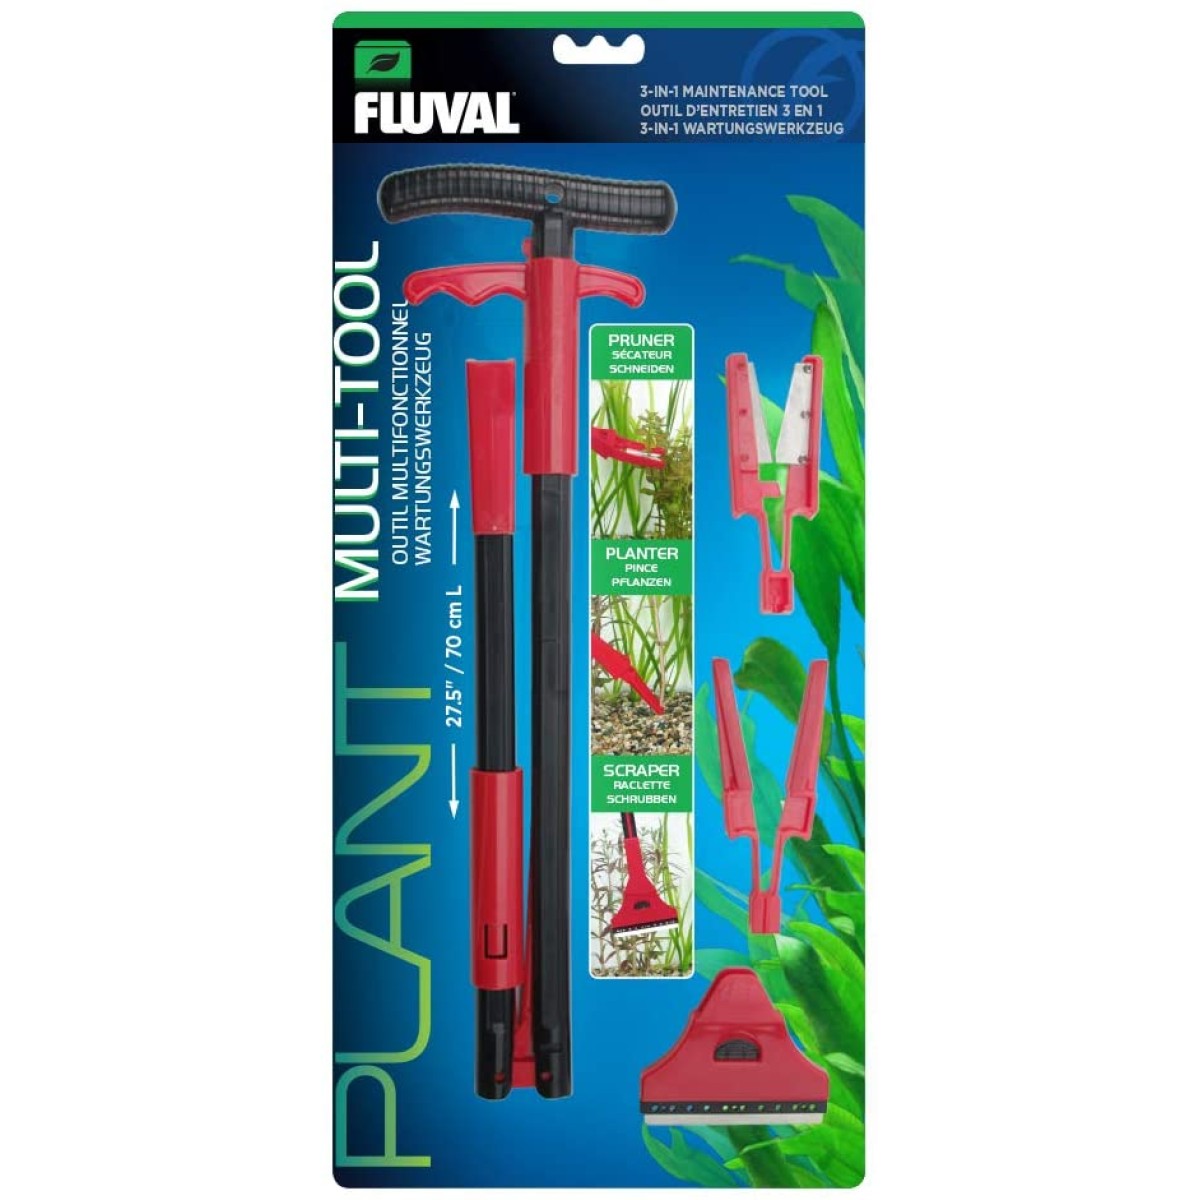 Fluval Plant Multi-Tool – 3-in-1 Maintenance Tool